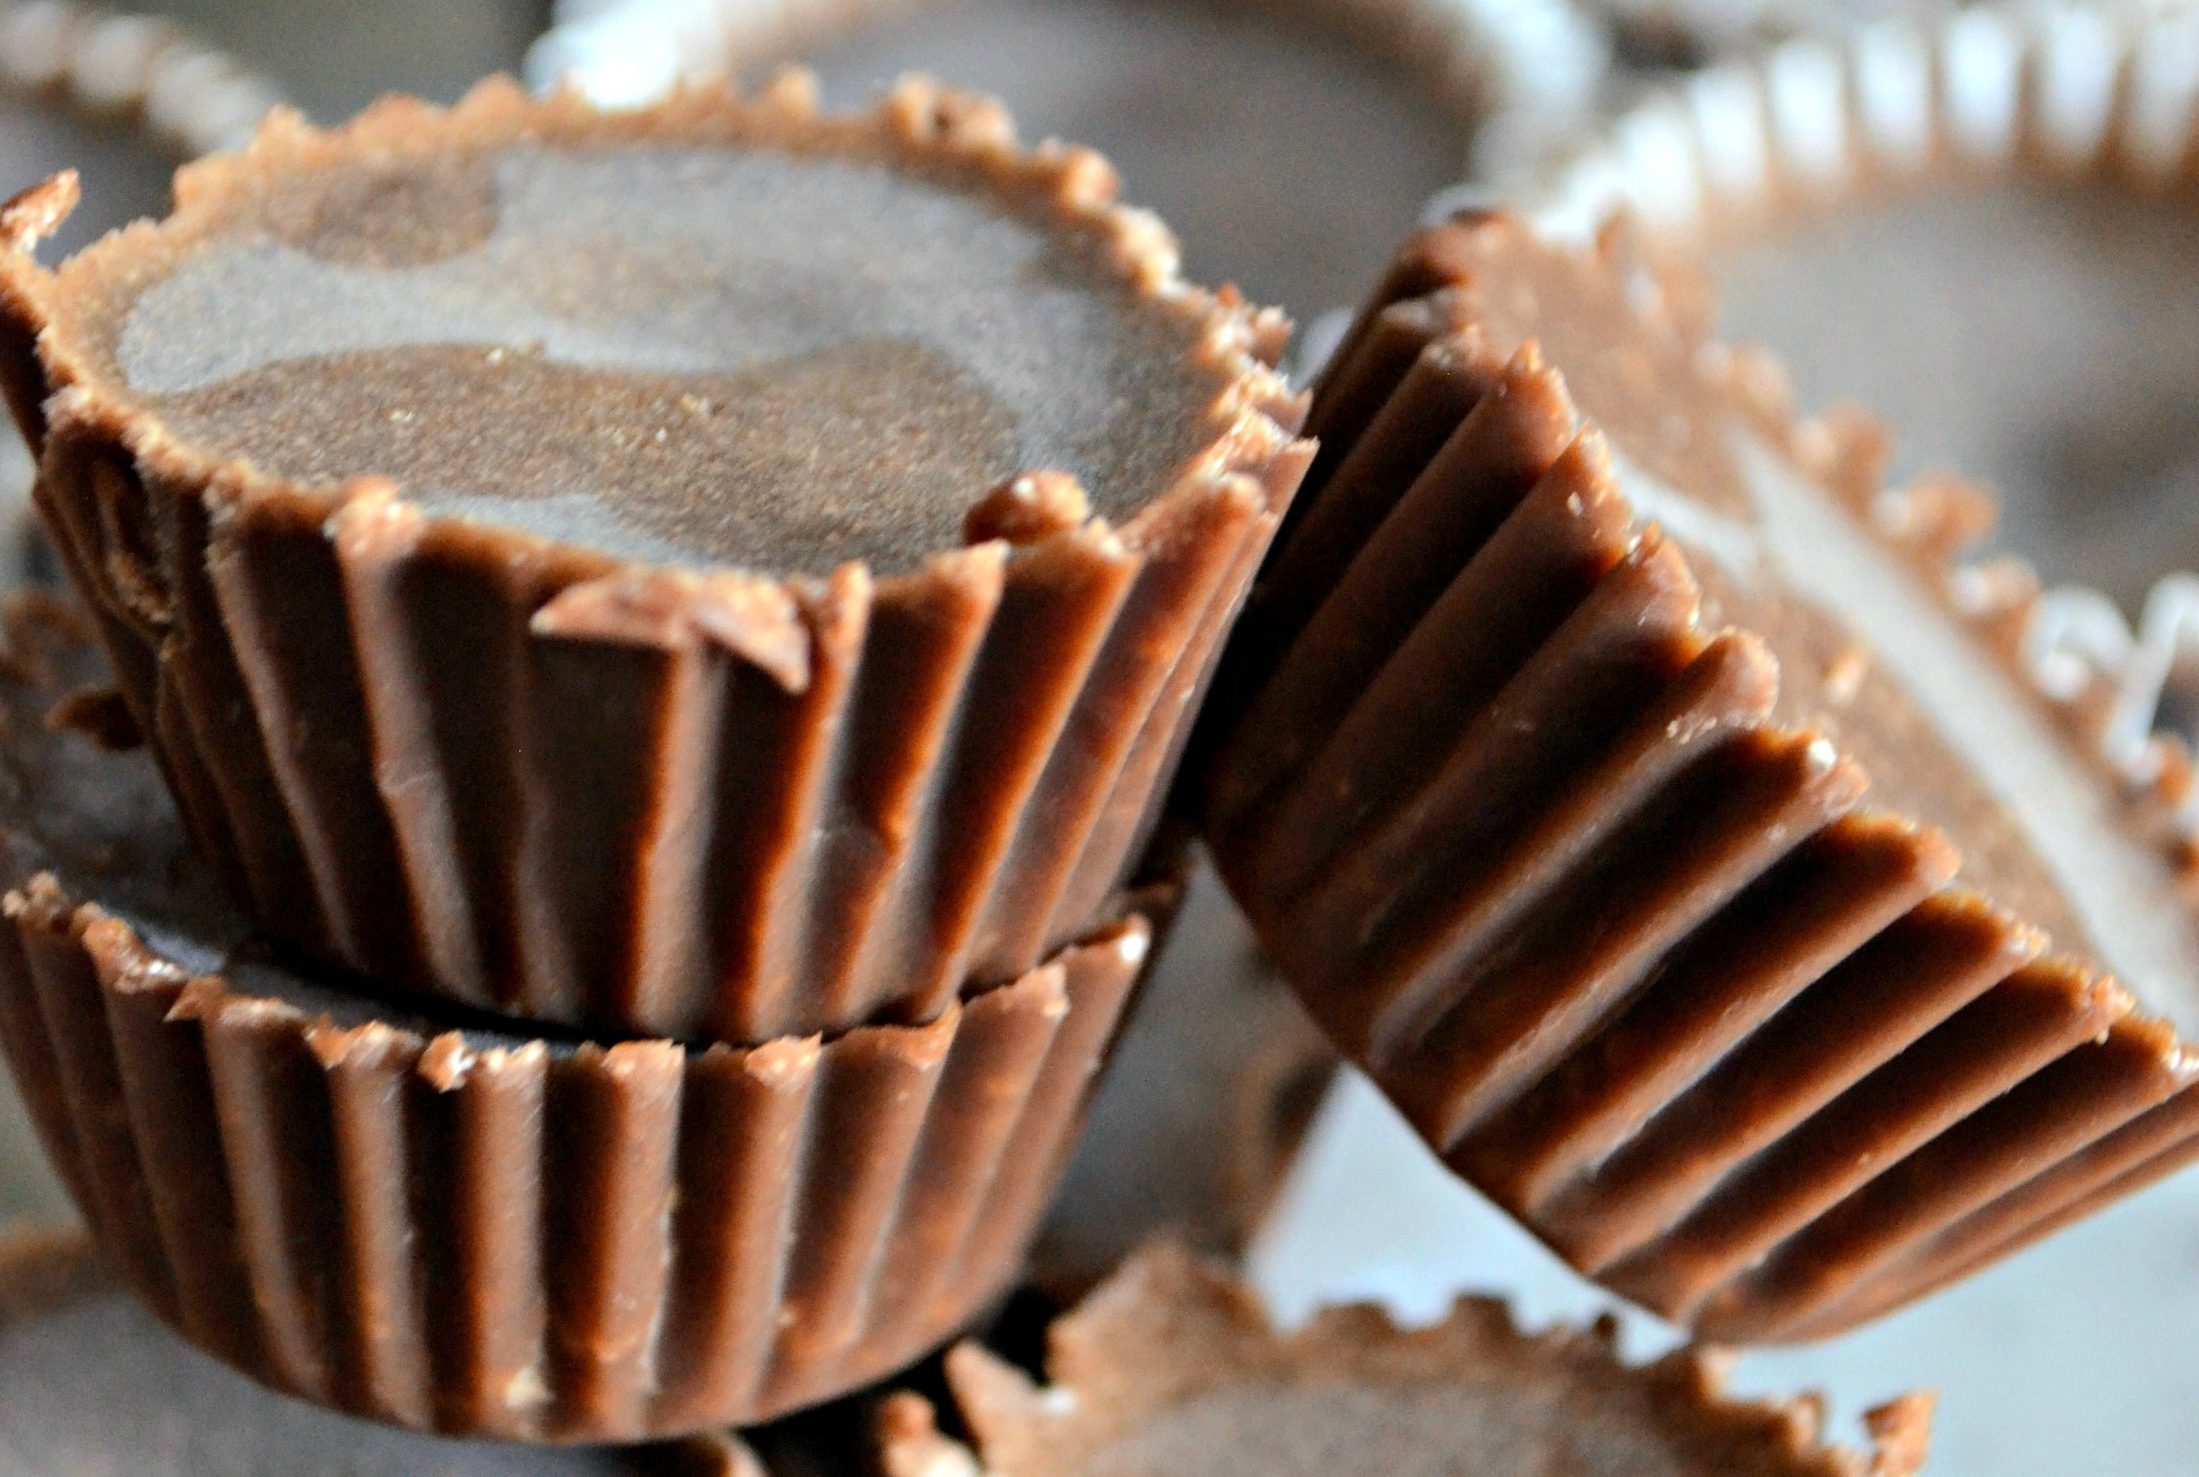 Make keto football recipes and ideas like these Peanut Butter Chocolate Fat Bombs